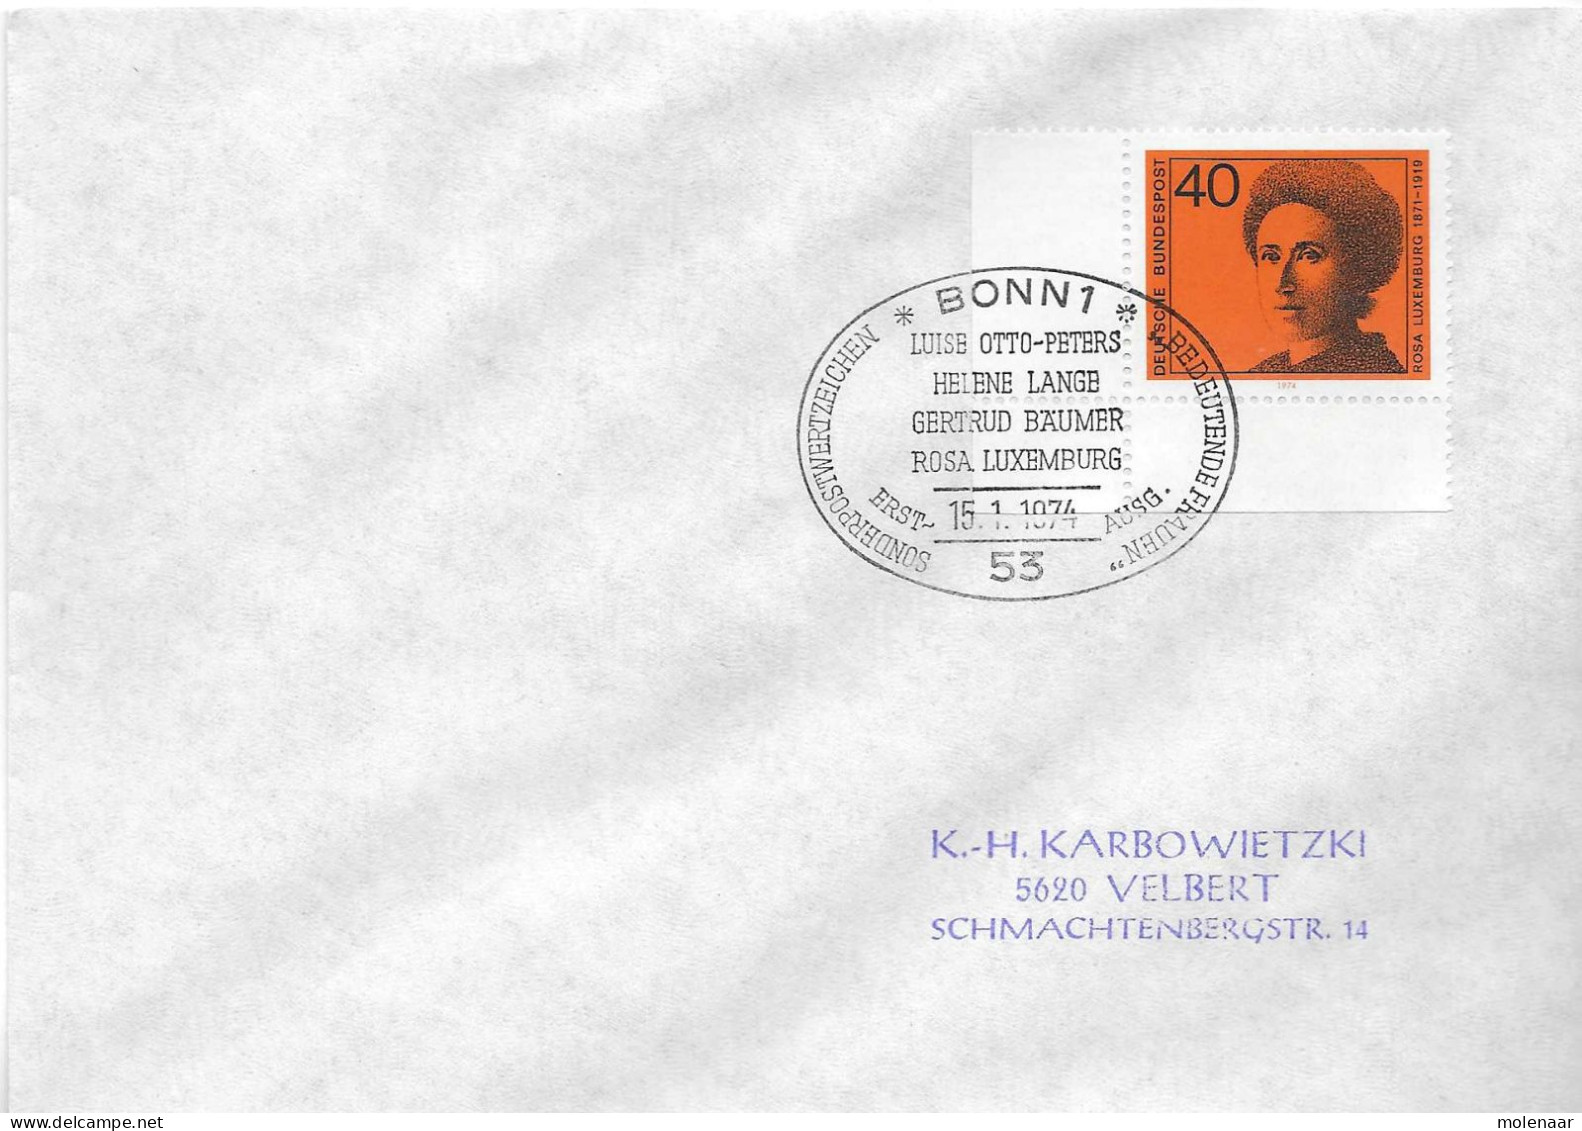 Postzegels > Europa > Duitsland > West-Duitsland > 1970-1979 > Brief Met No. 794 (17381) - Cartas & Documentos